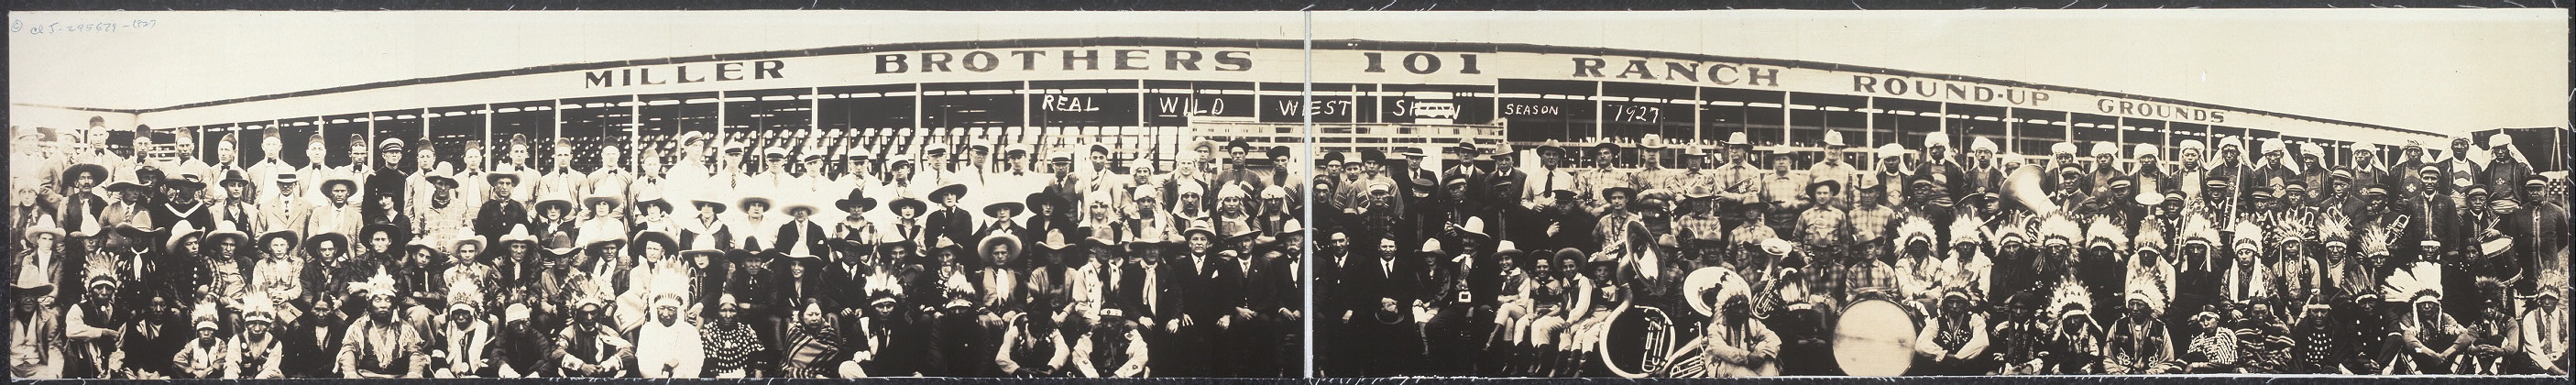 Real Wild West Show, season 1927